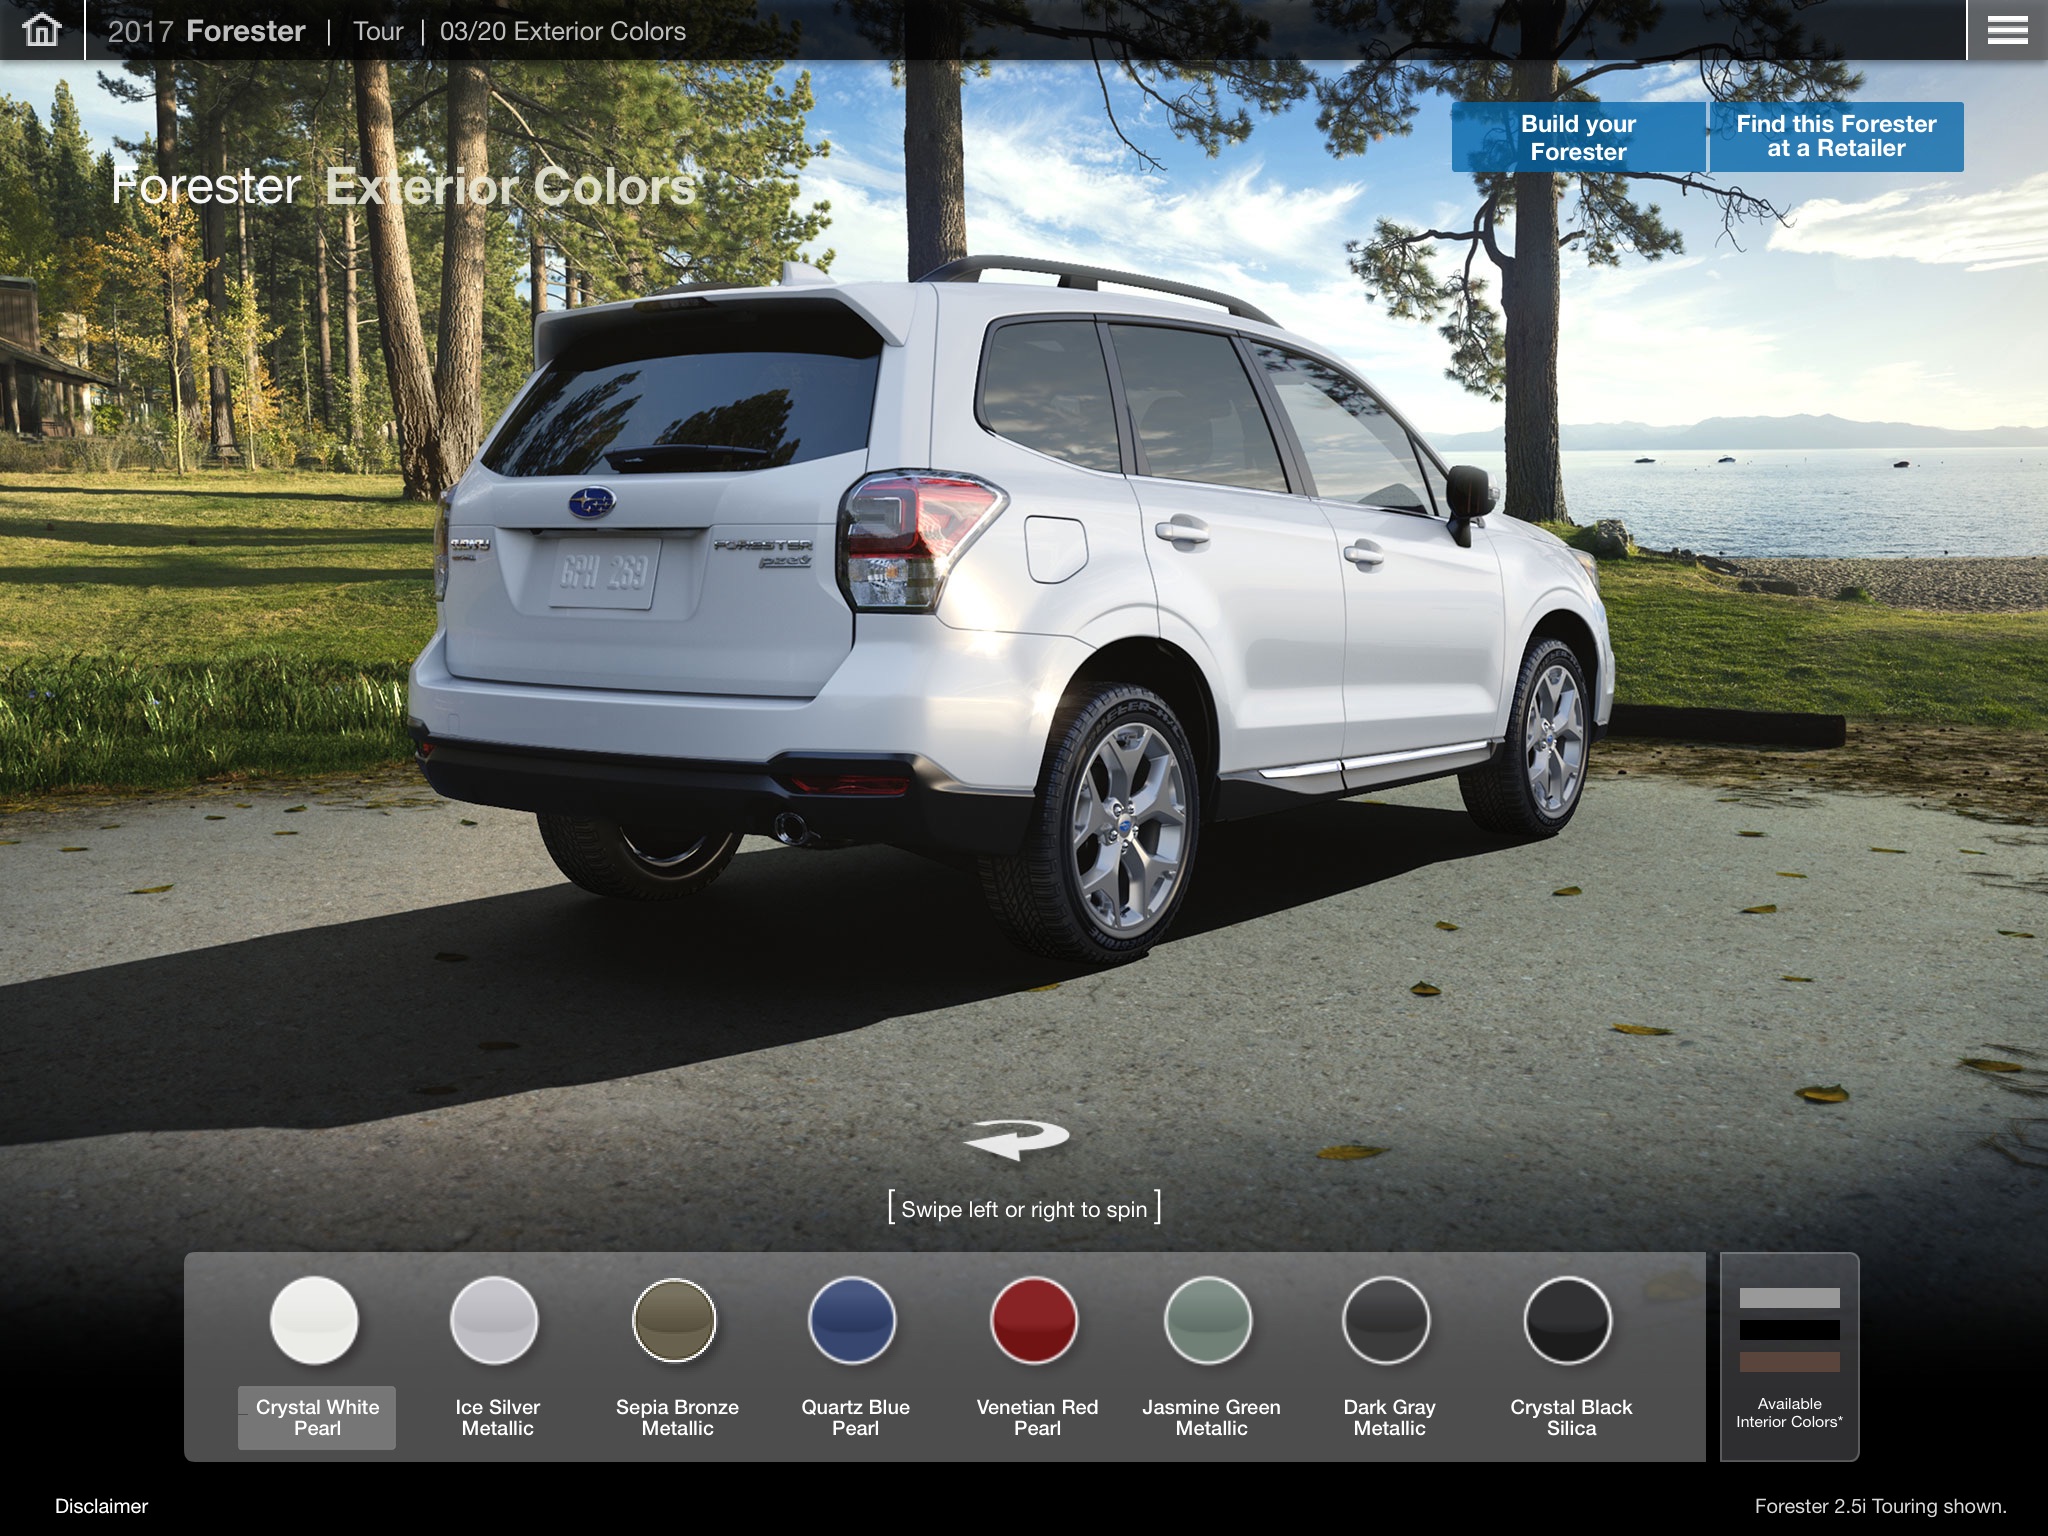 Official 2017 Subaru Forester Guided Tour App screenshot 2